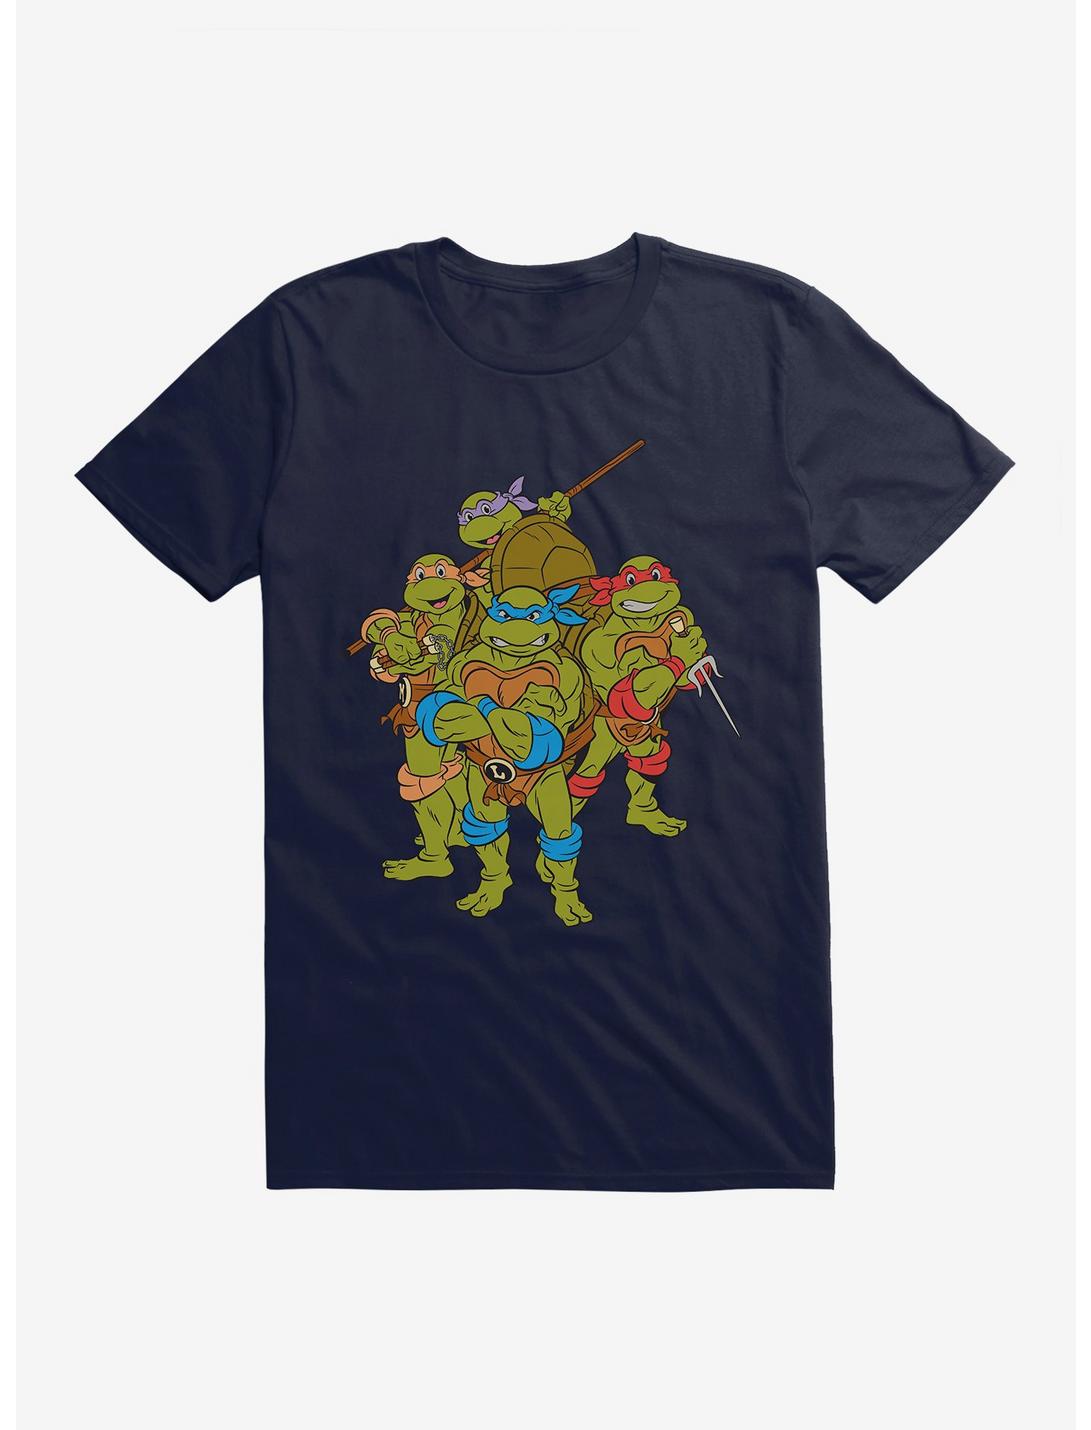 Teenage Mutant Ninja Turtles Group Pose T-Shirt, NAVY, hi-res